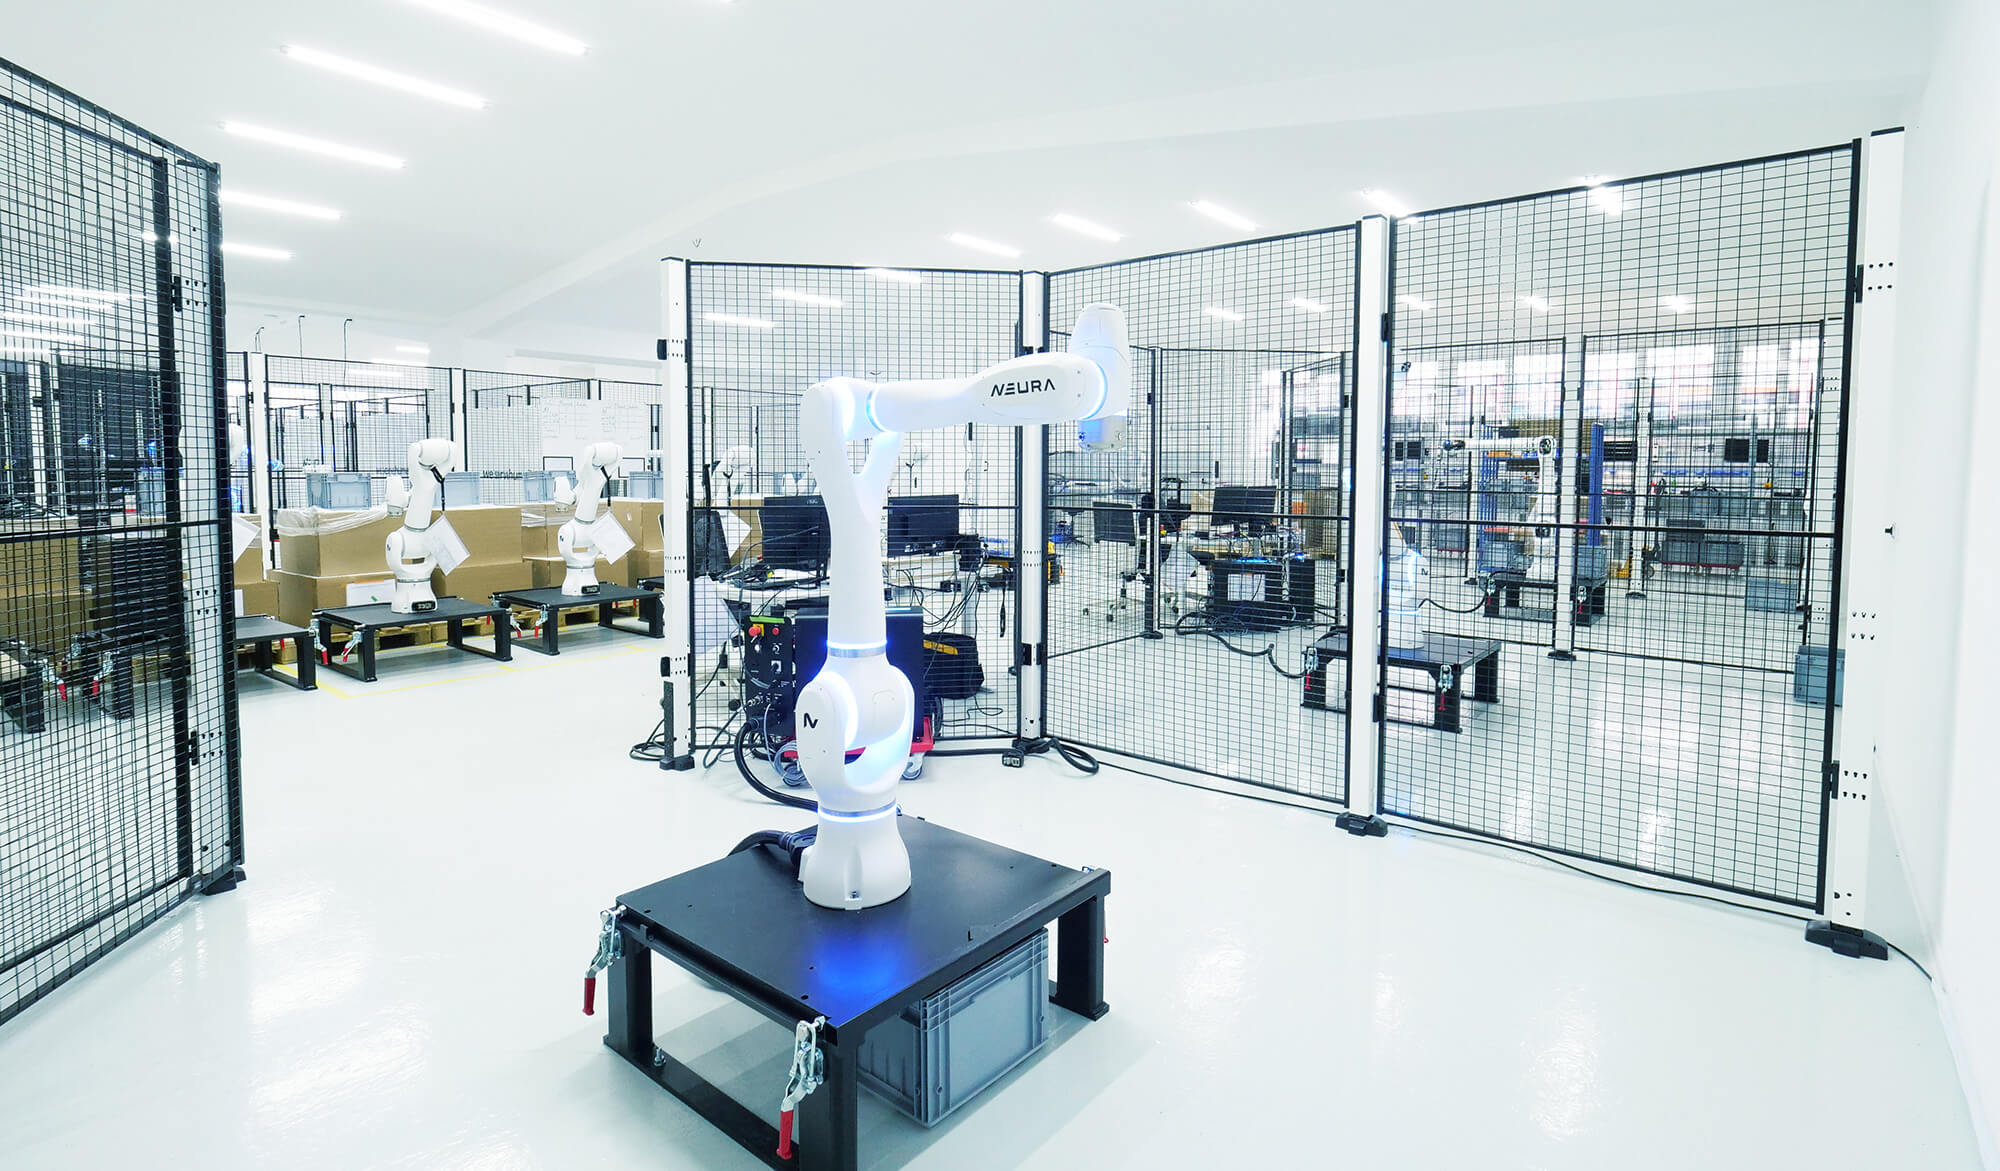 NEURA Robotics brings production to Metzingen Germany